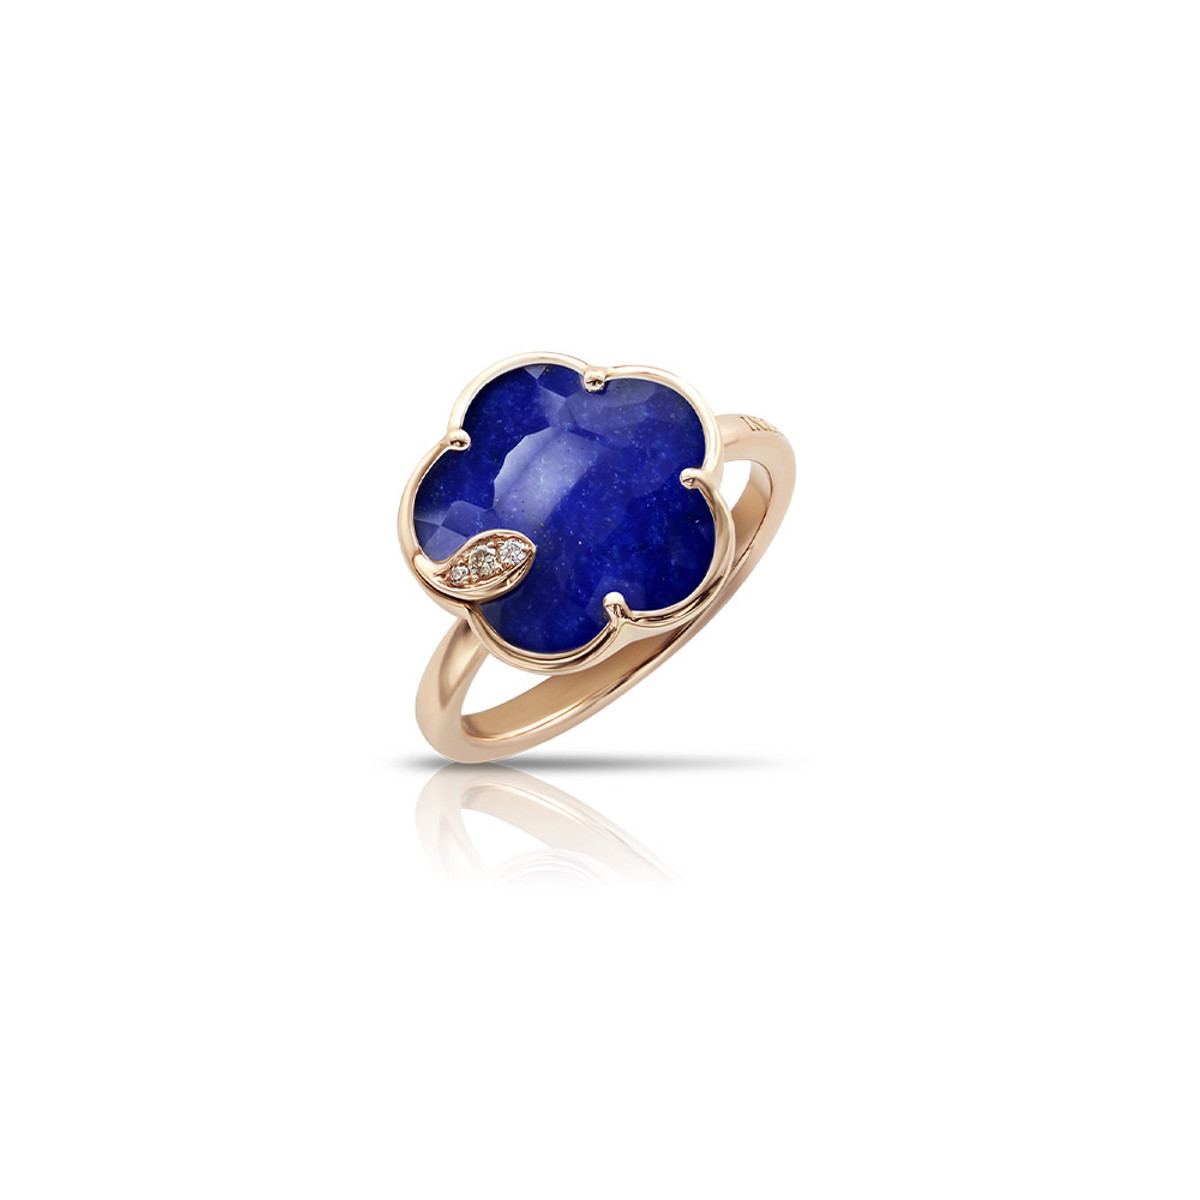 Pasquale Bruni 18K Rose Gold Rock Crystal and Lapis Lazuli Diamond Petit Joli Ring-42406 Product Image